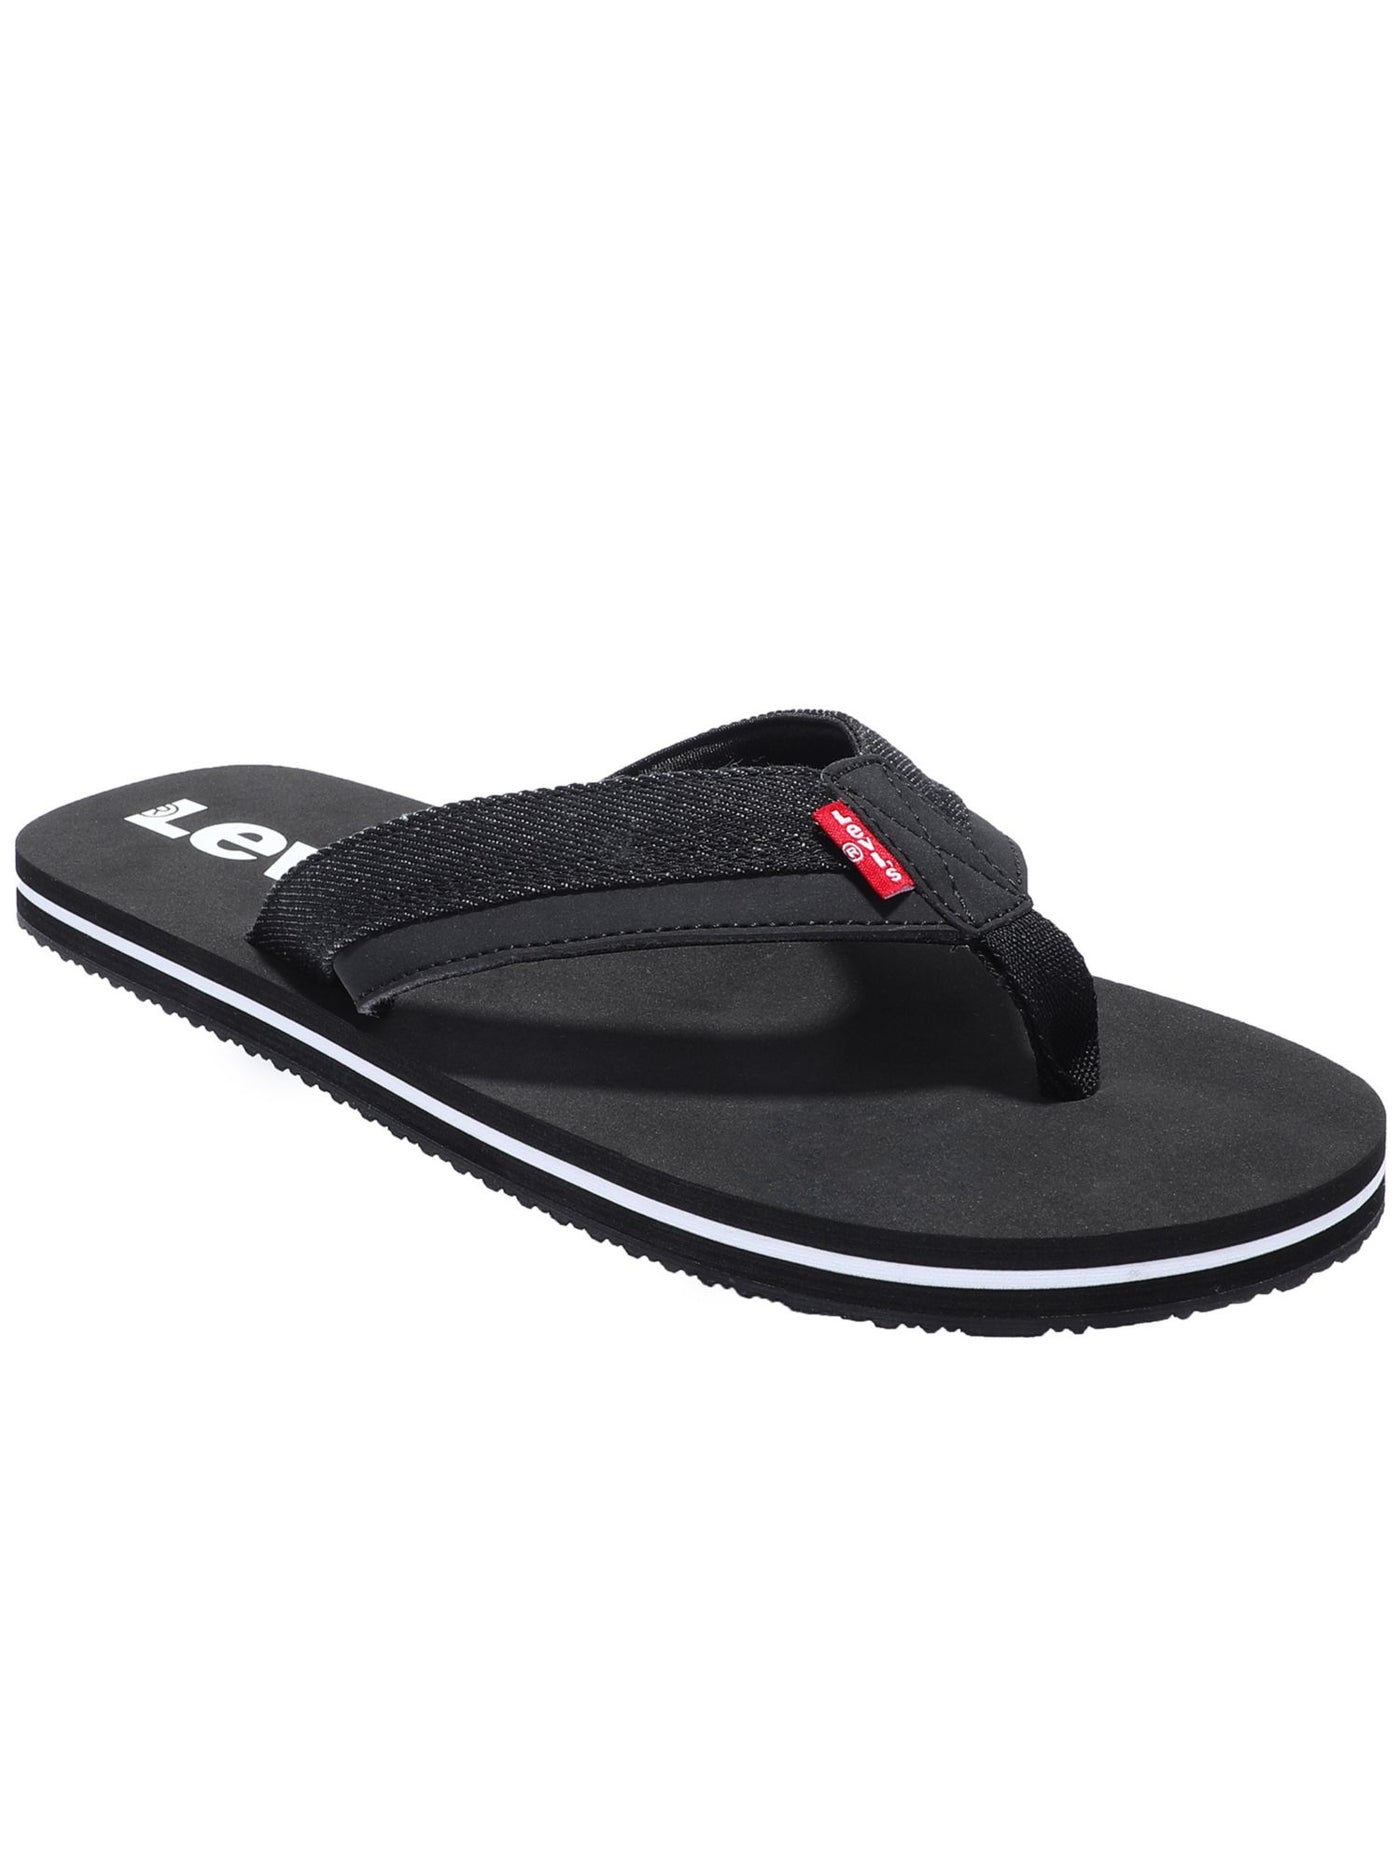 LEVI'S Mens Black Mixed Media Padded Wordmark Round Toe Slip On Thong Sandals Shoes 10